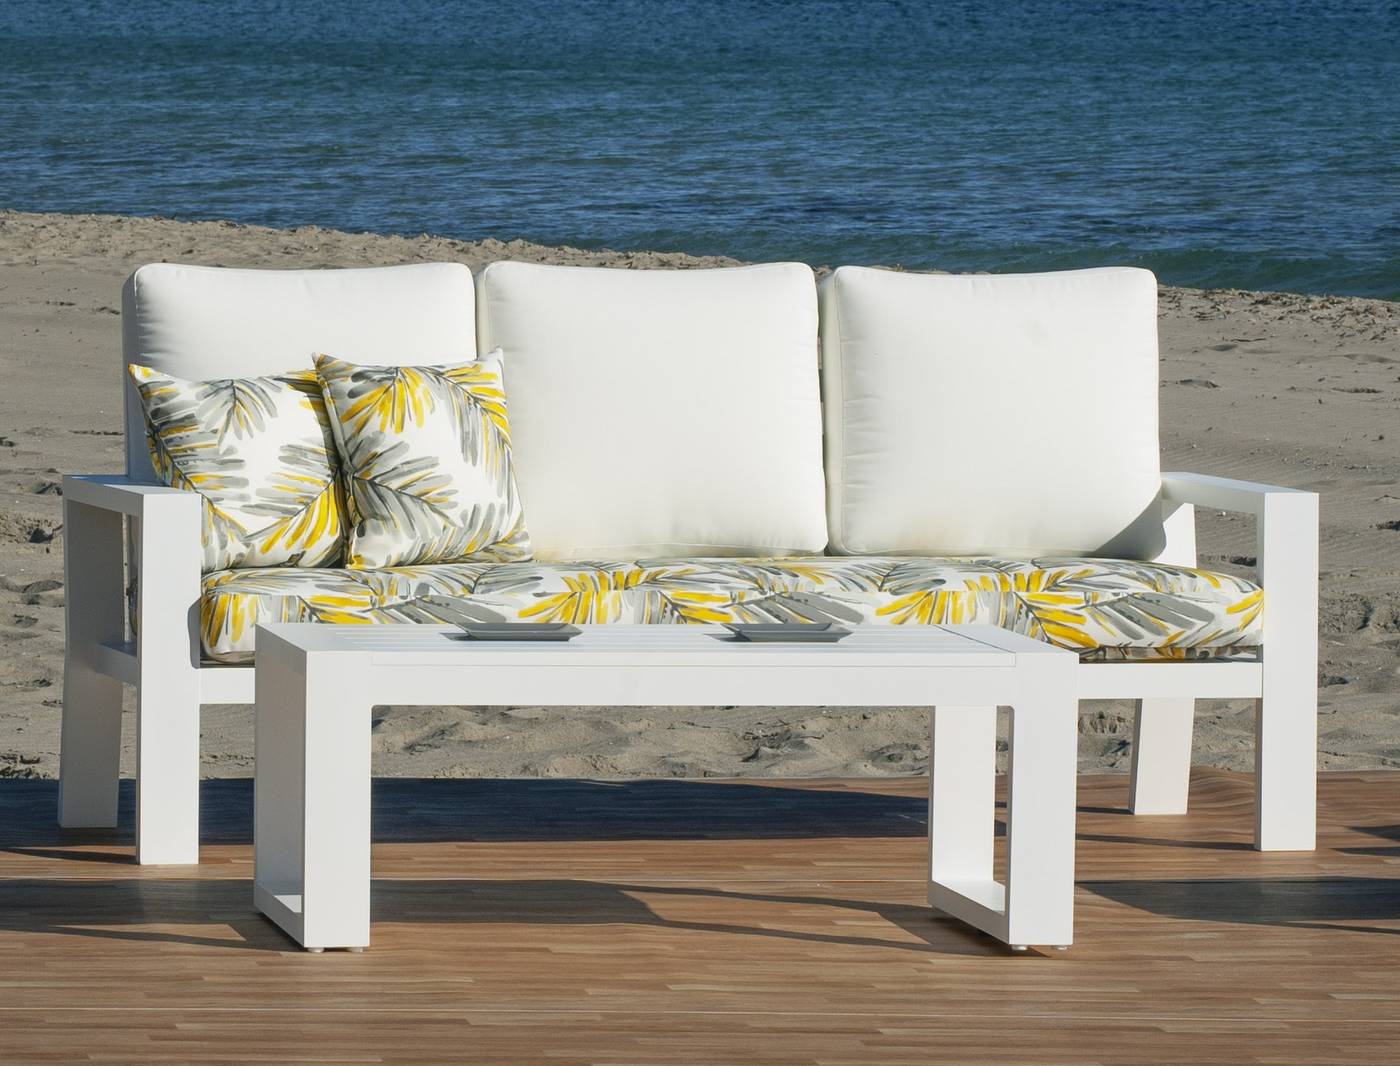 Set Aluminio Luxe Kingston-8 - Conjunto lujoso de aluminio: 1 sofá de 3 plazas + 2 sillones + 1 mesa de centro + cojines.